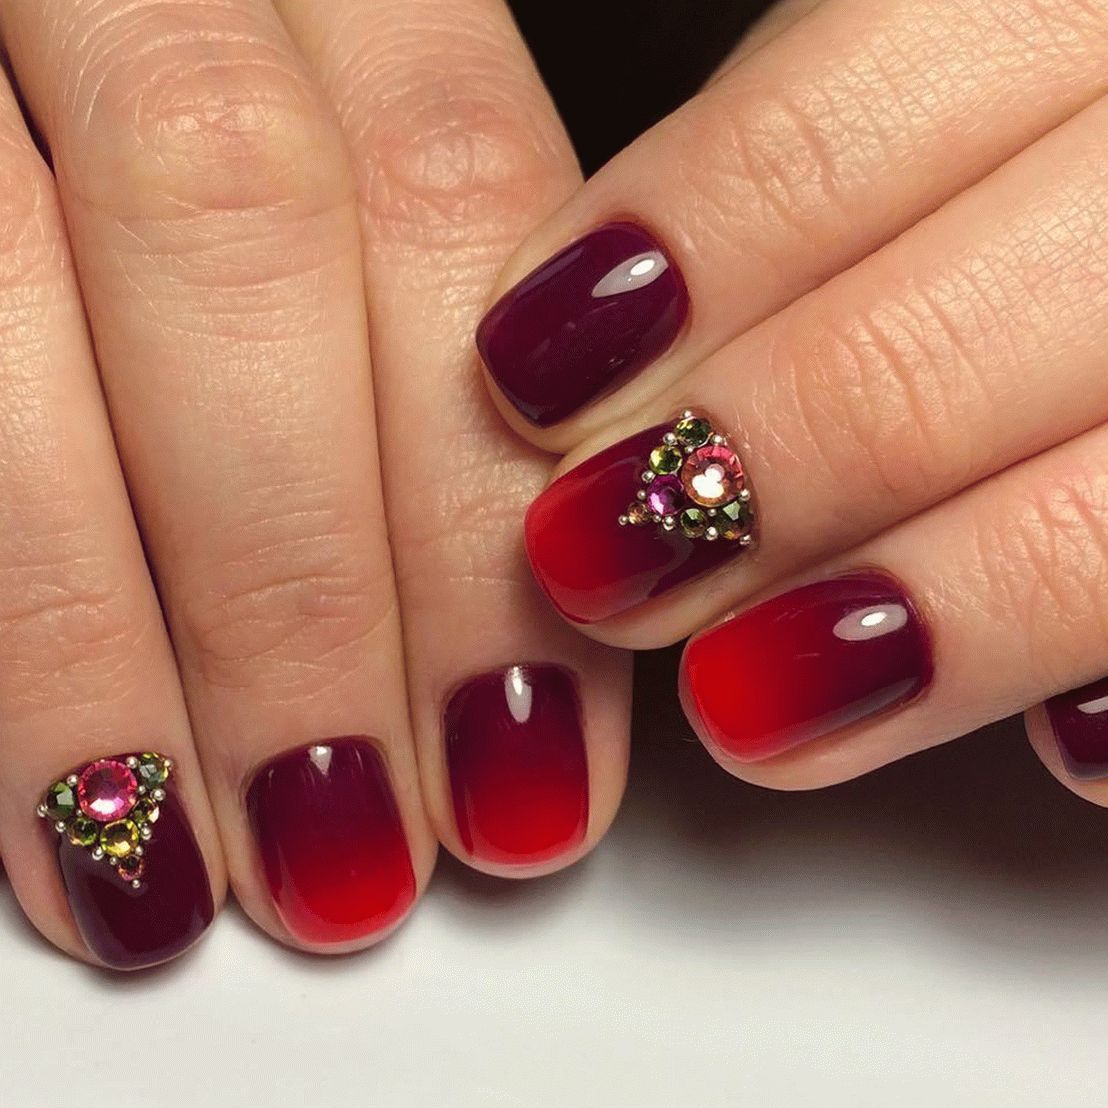 Autumn manicure in burgundy tones